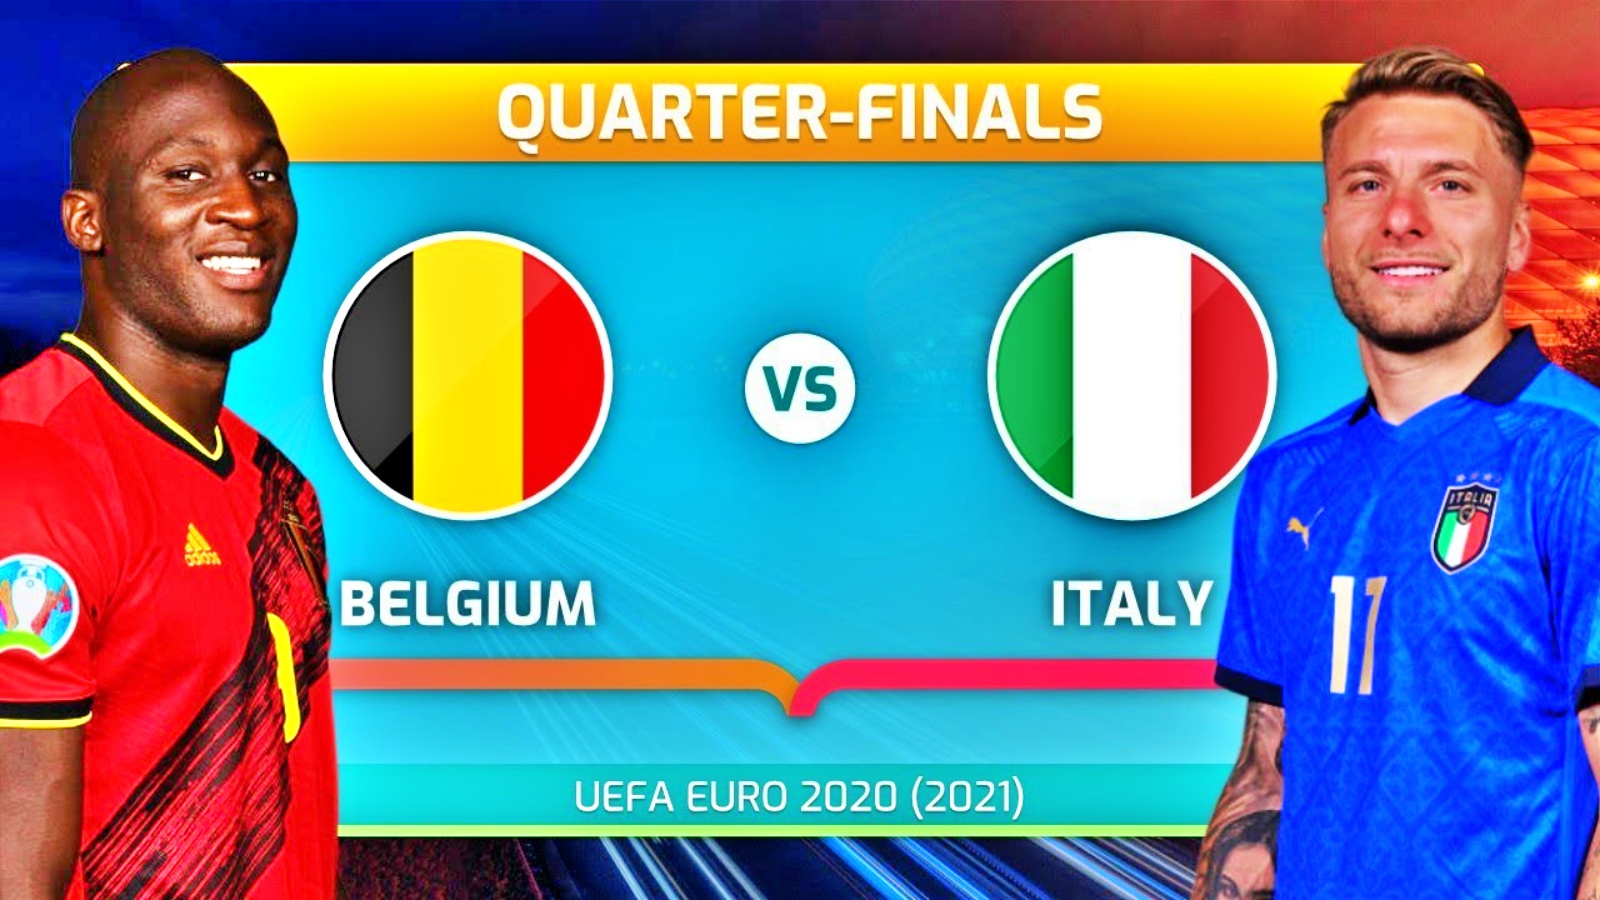 BELGIUM - ITALY PRO TV LIVE EURO 2020